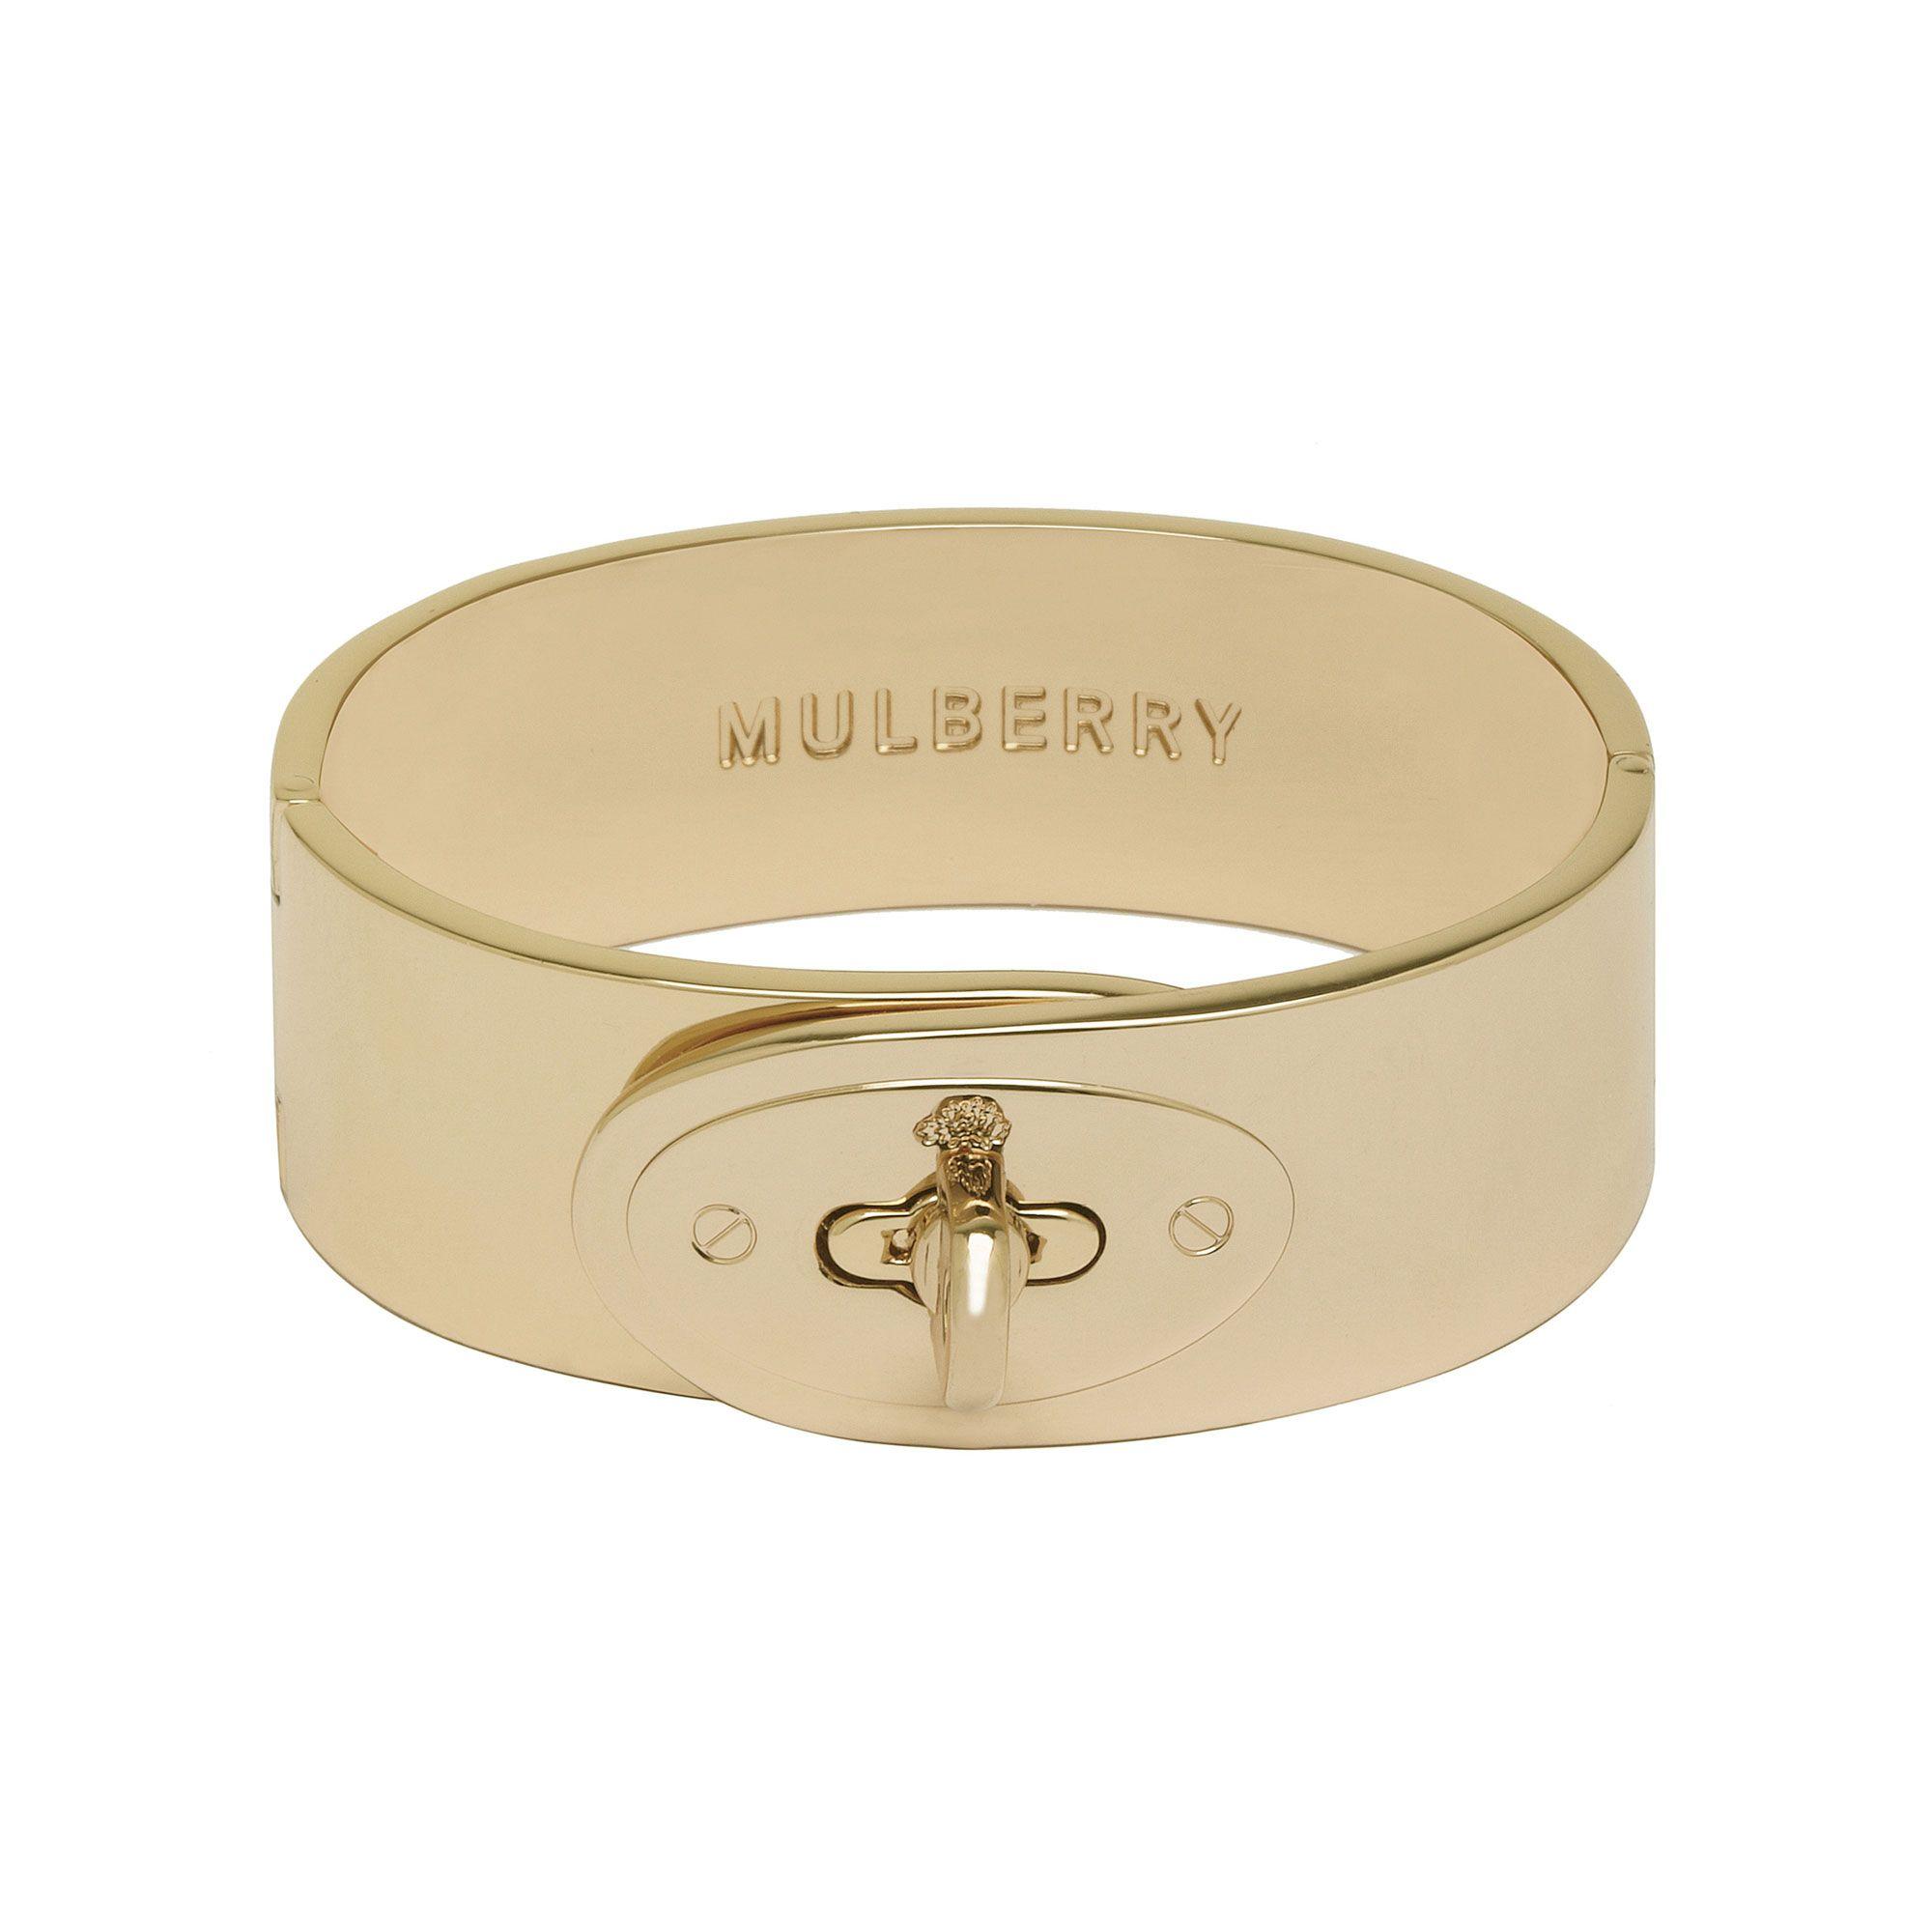 Lyst - Mulberry Bayswater Bracelet in Metallic